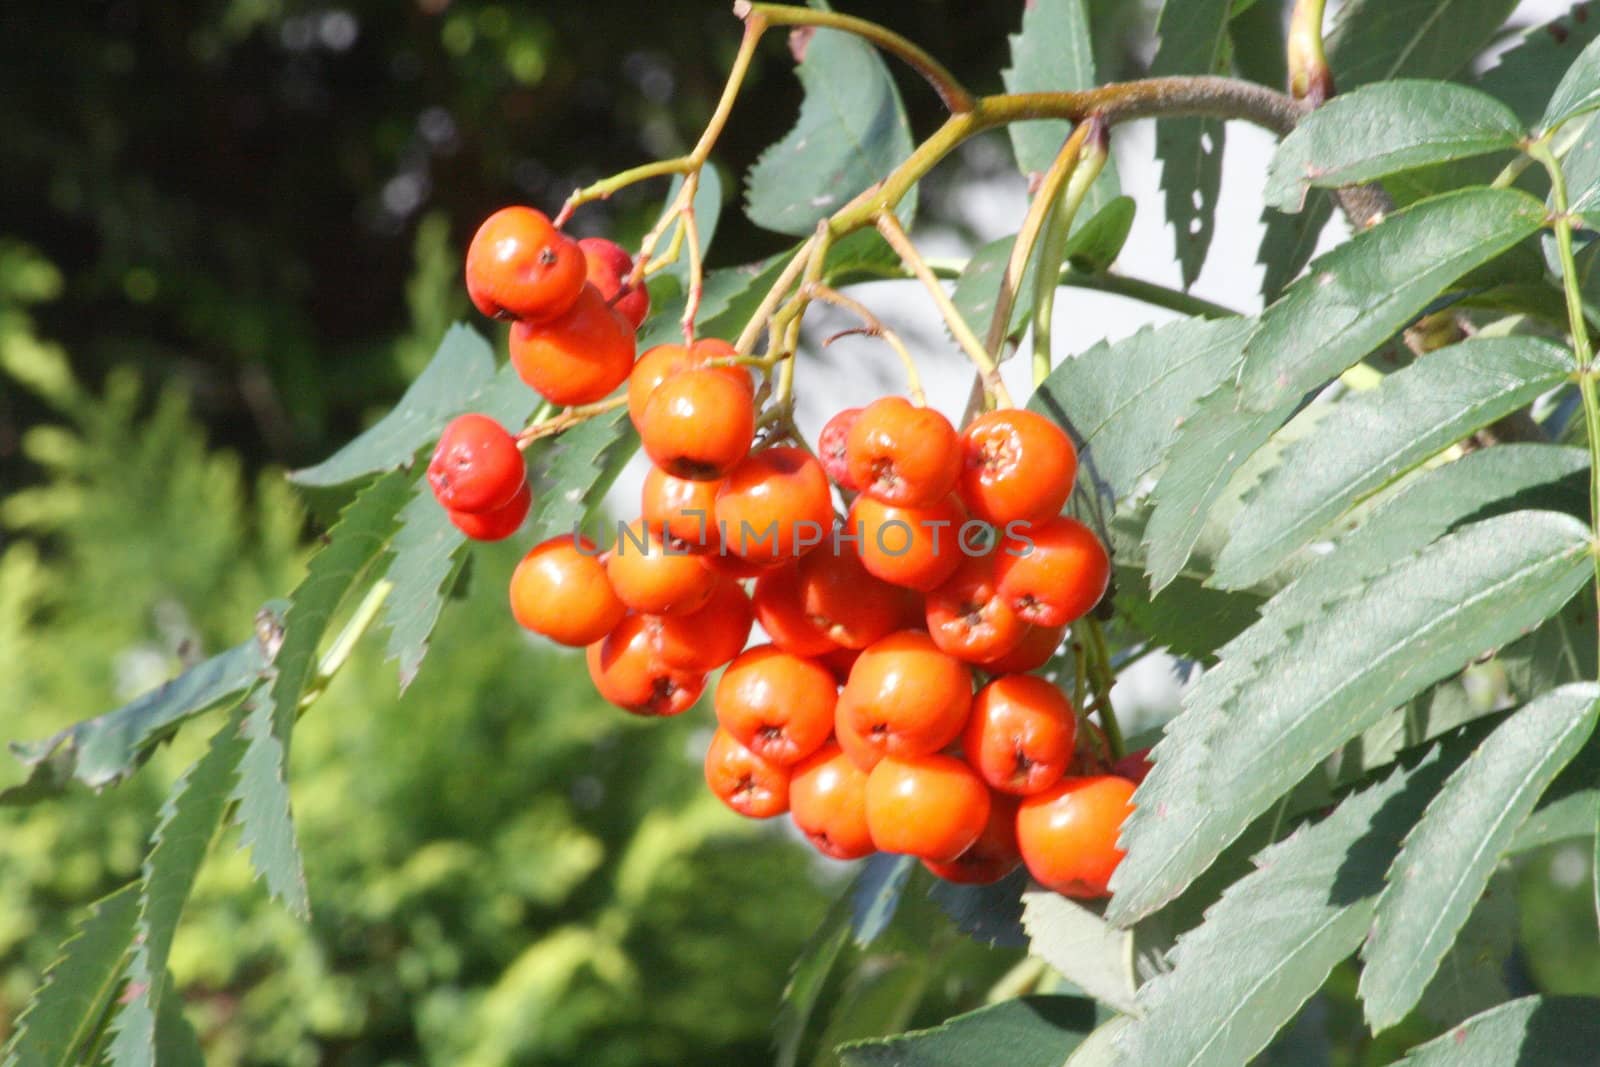 Reife Früchte eines Vogelbeeren-baumes (Sorbus aucuparia)	
Ripe fruit of a rowan tree (Sorbus aucuparia)